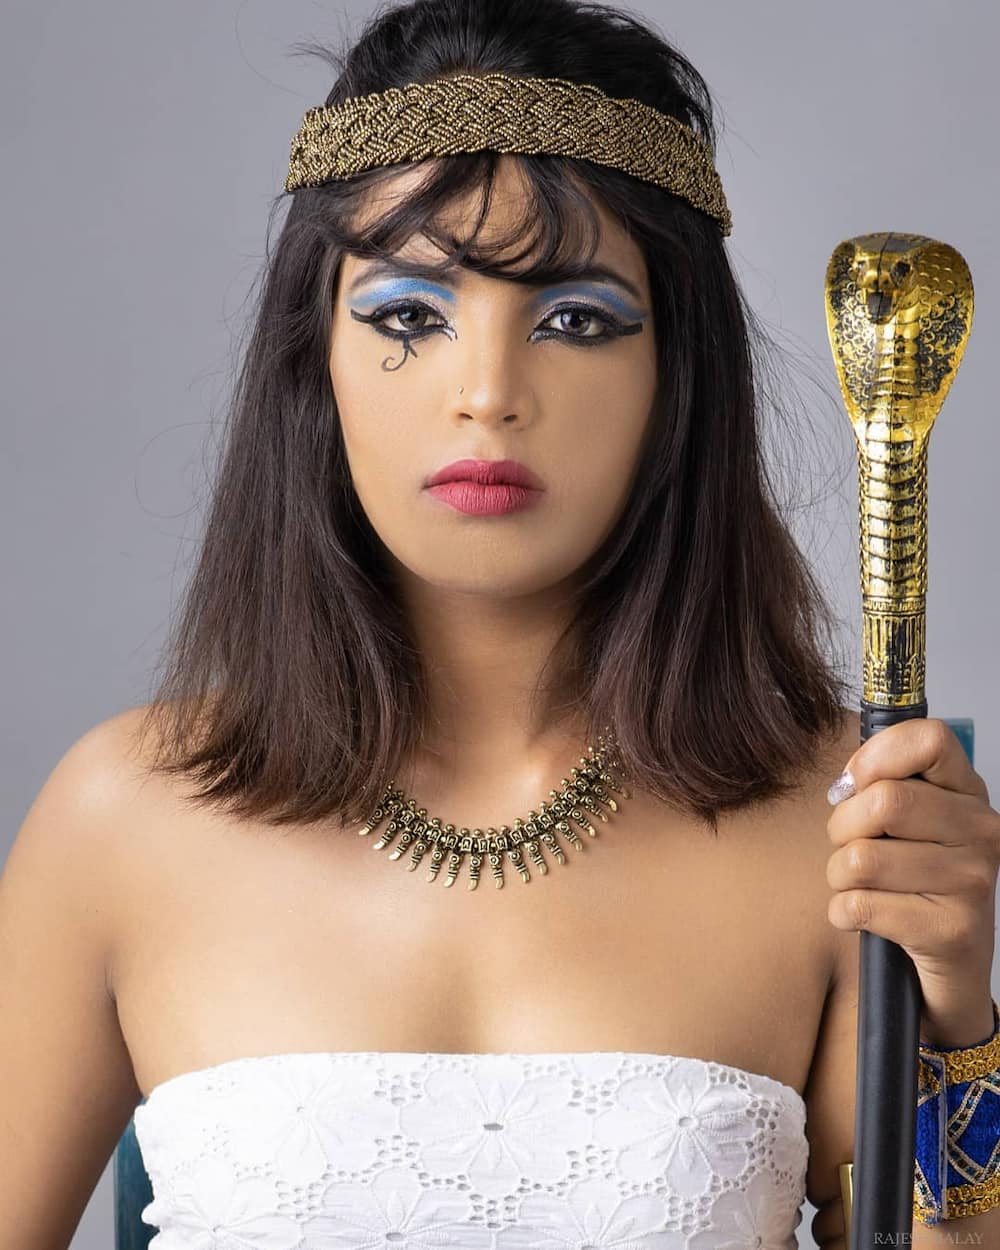 Egyptian makeup